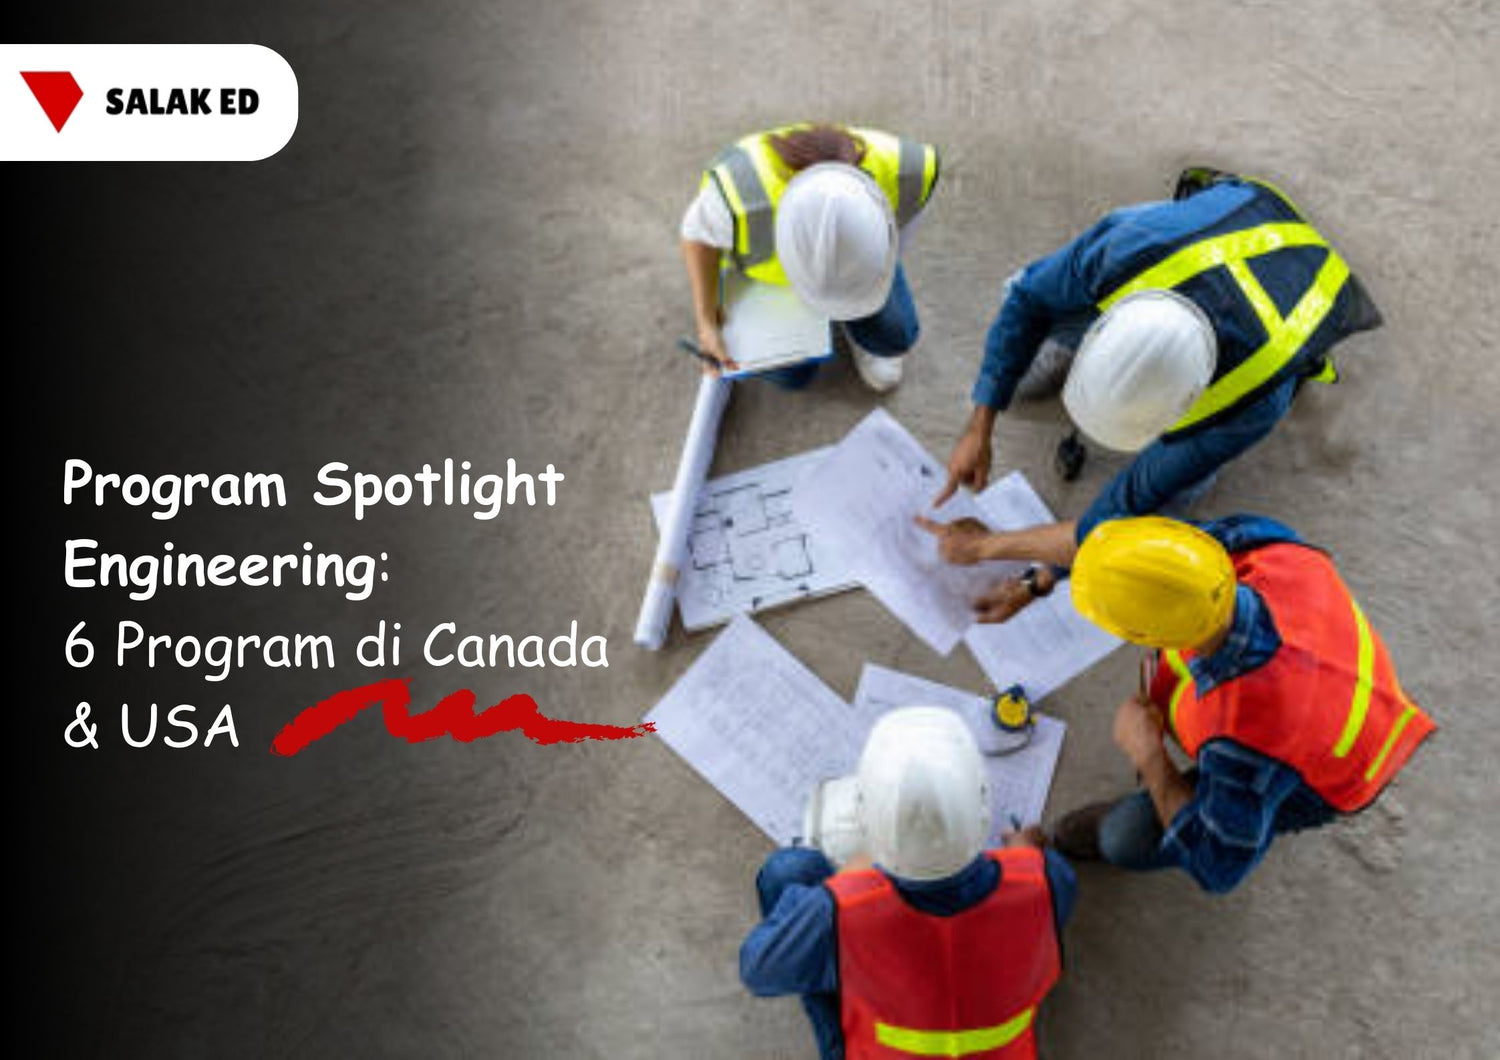 Program Spotlight Engineering: 6 Program di Canada & USA